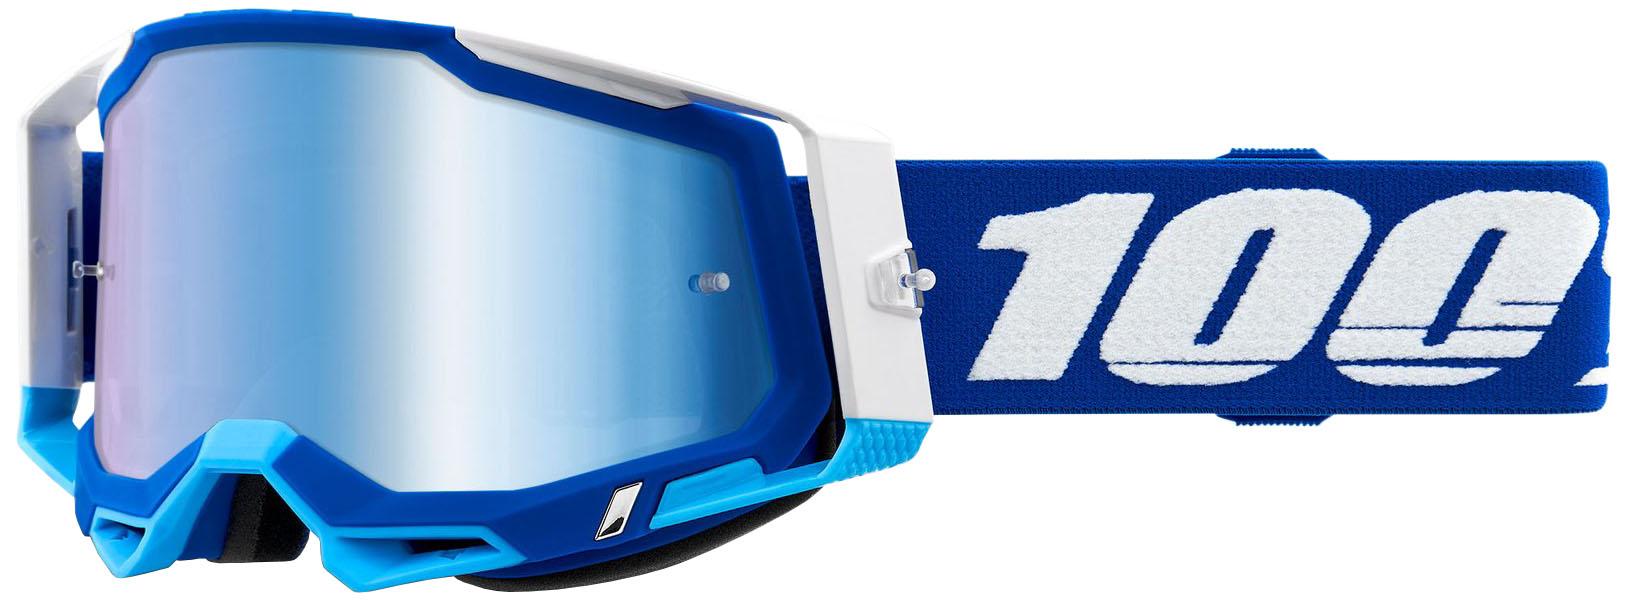 100% Racecraft 2 Mtb Goggles - Blue